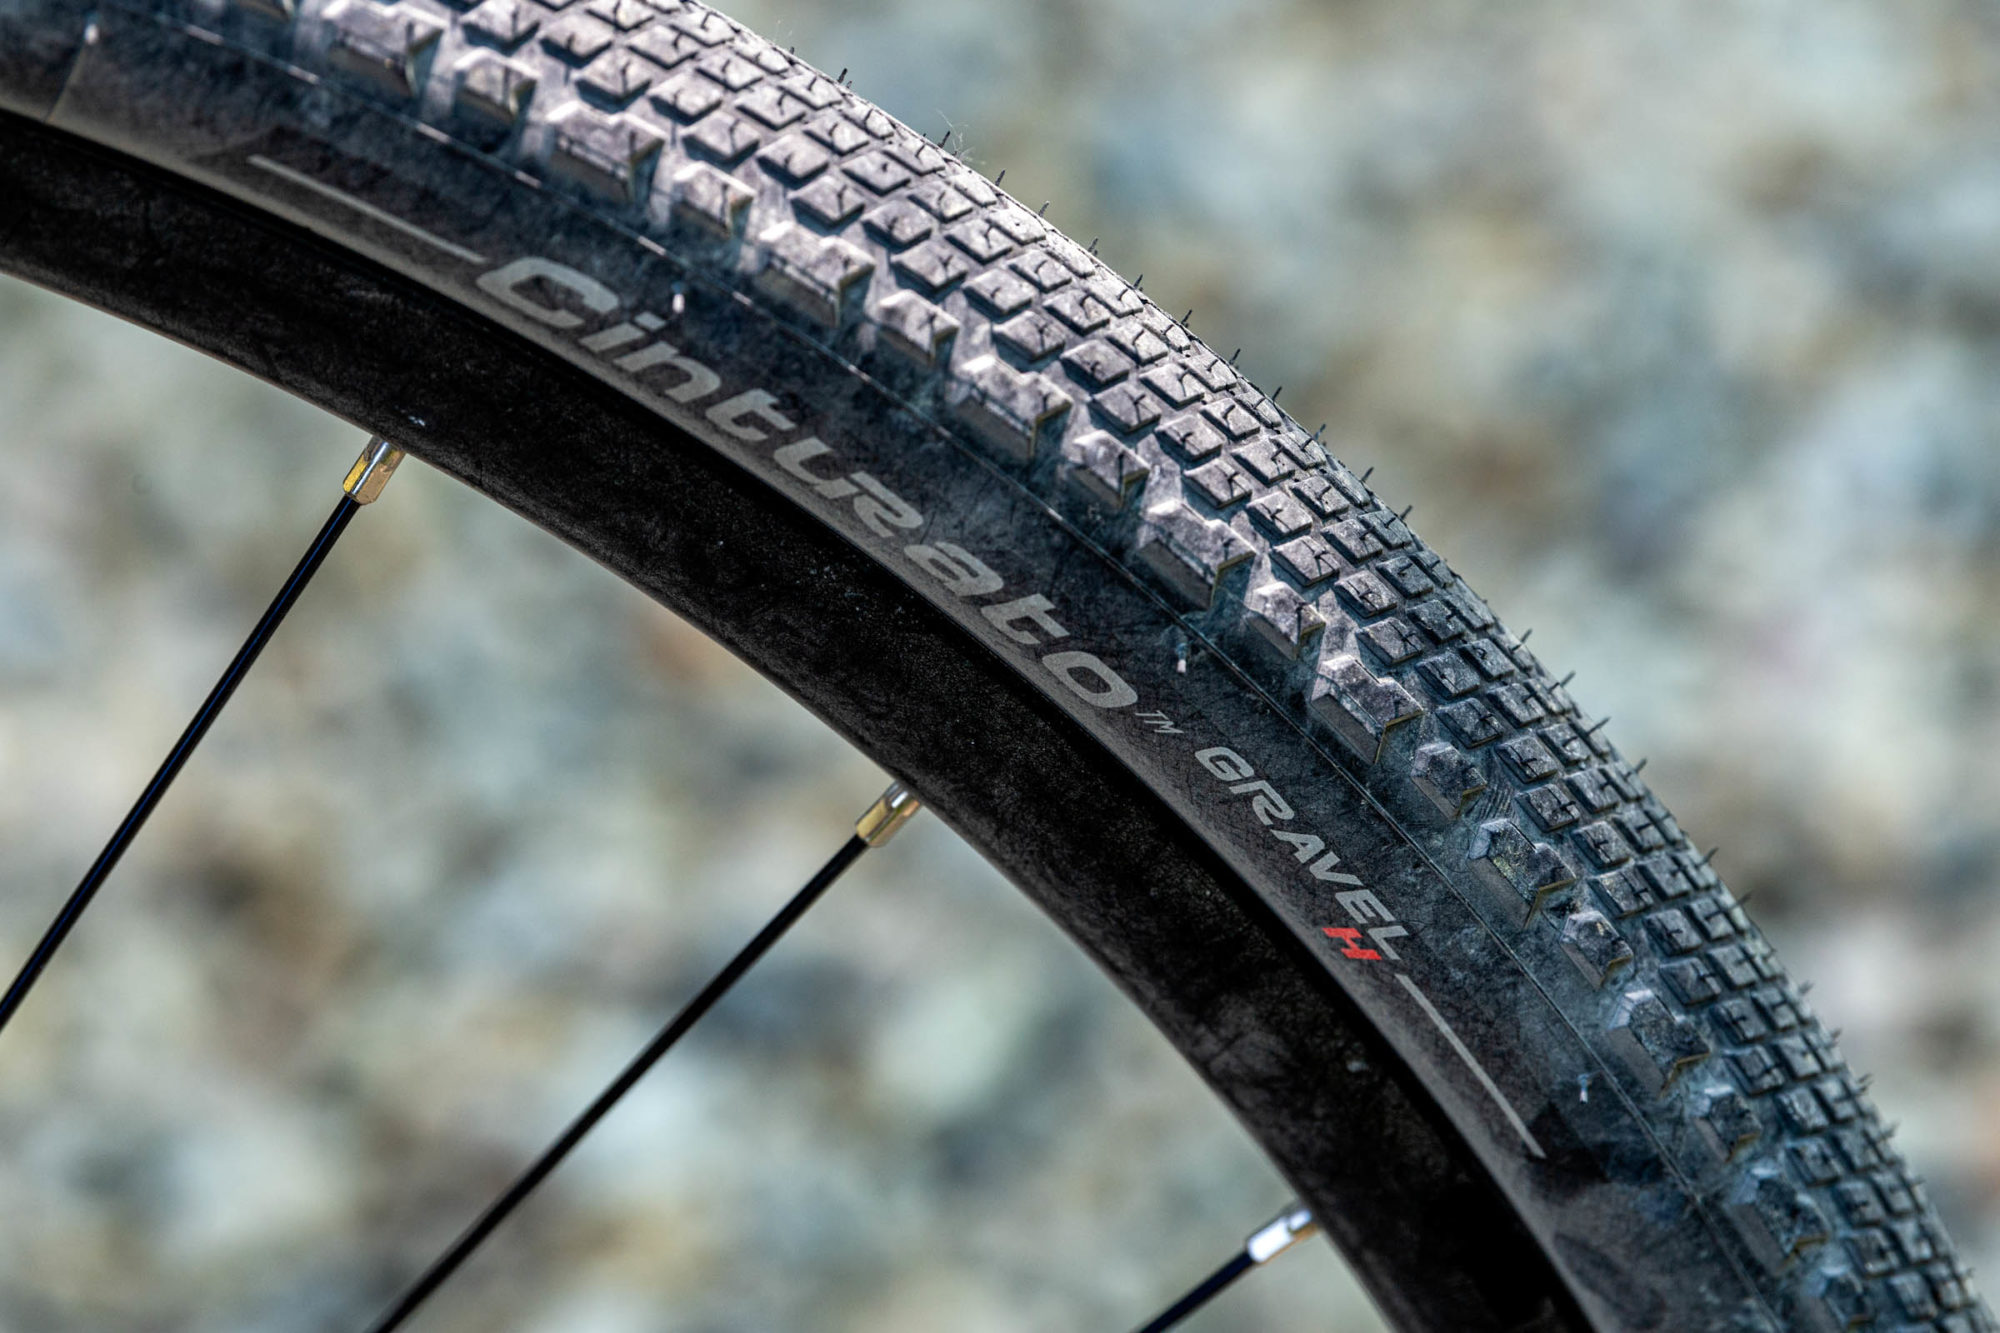 pirelli cycling tires